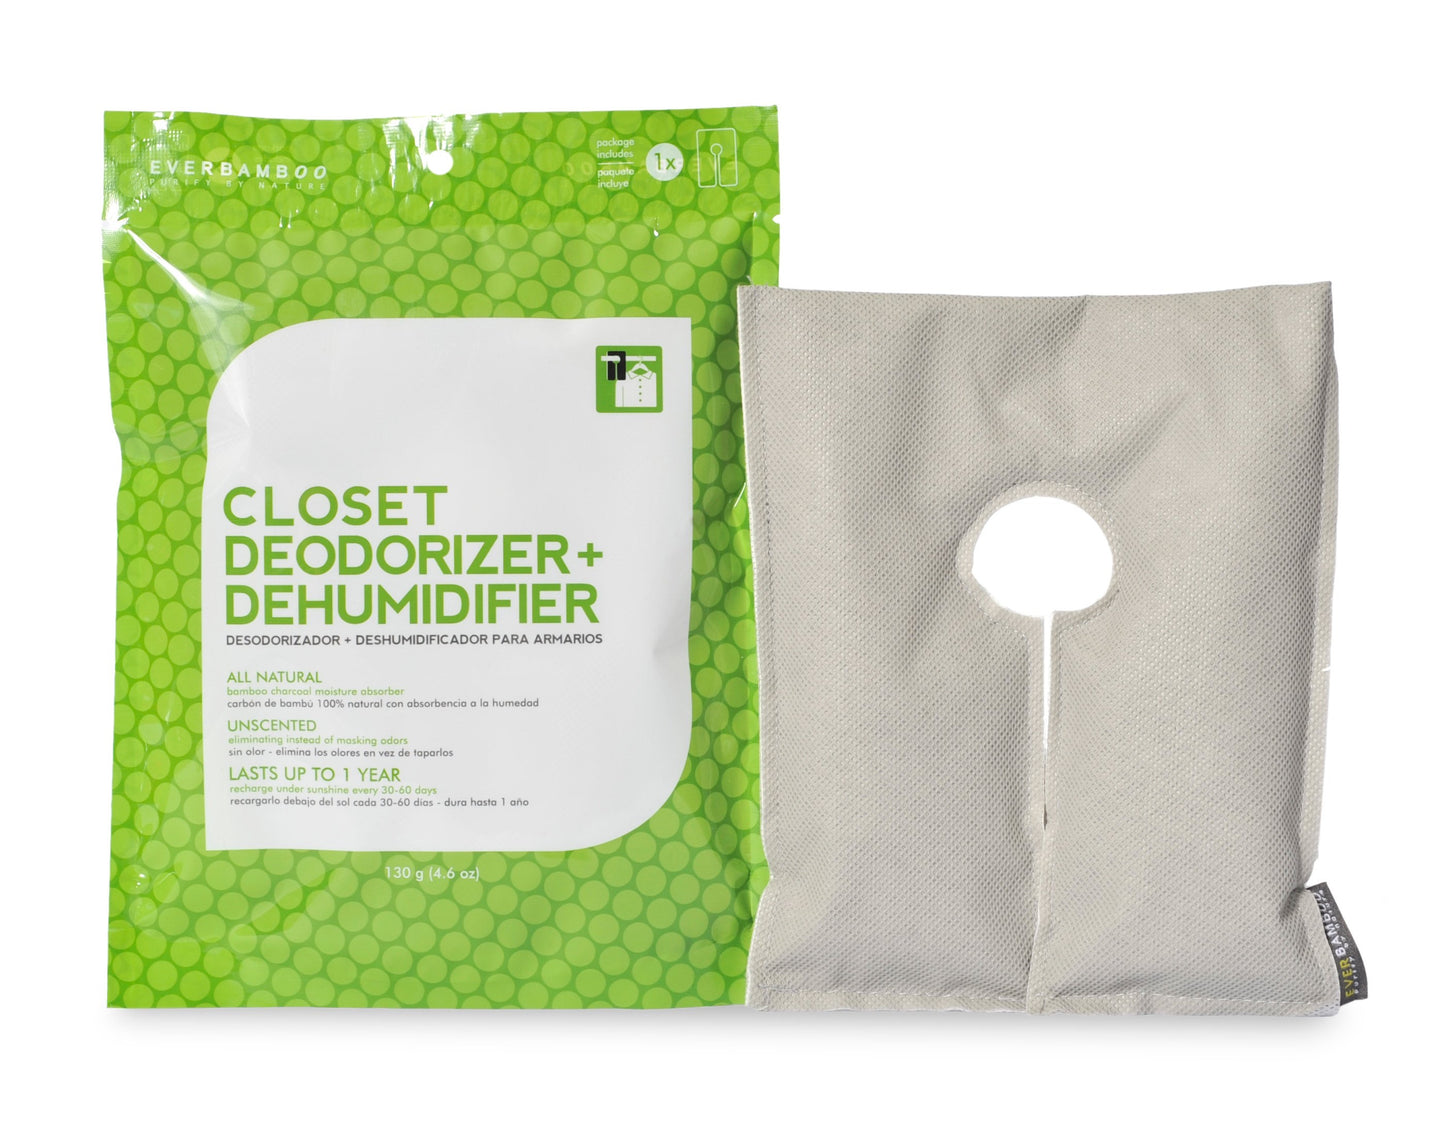 EverBamboo Closet Deodorizer+Dehumidifier